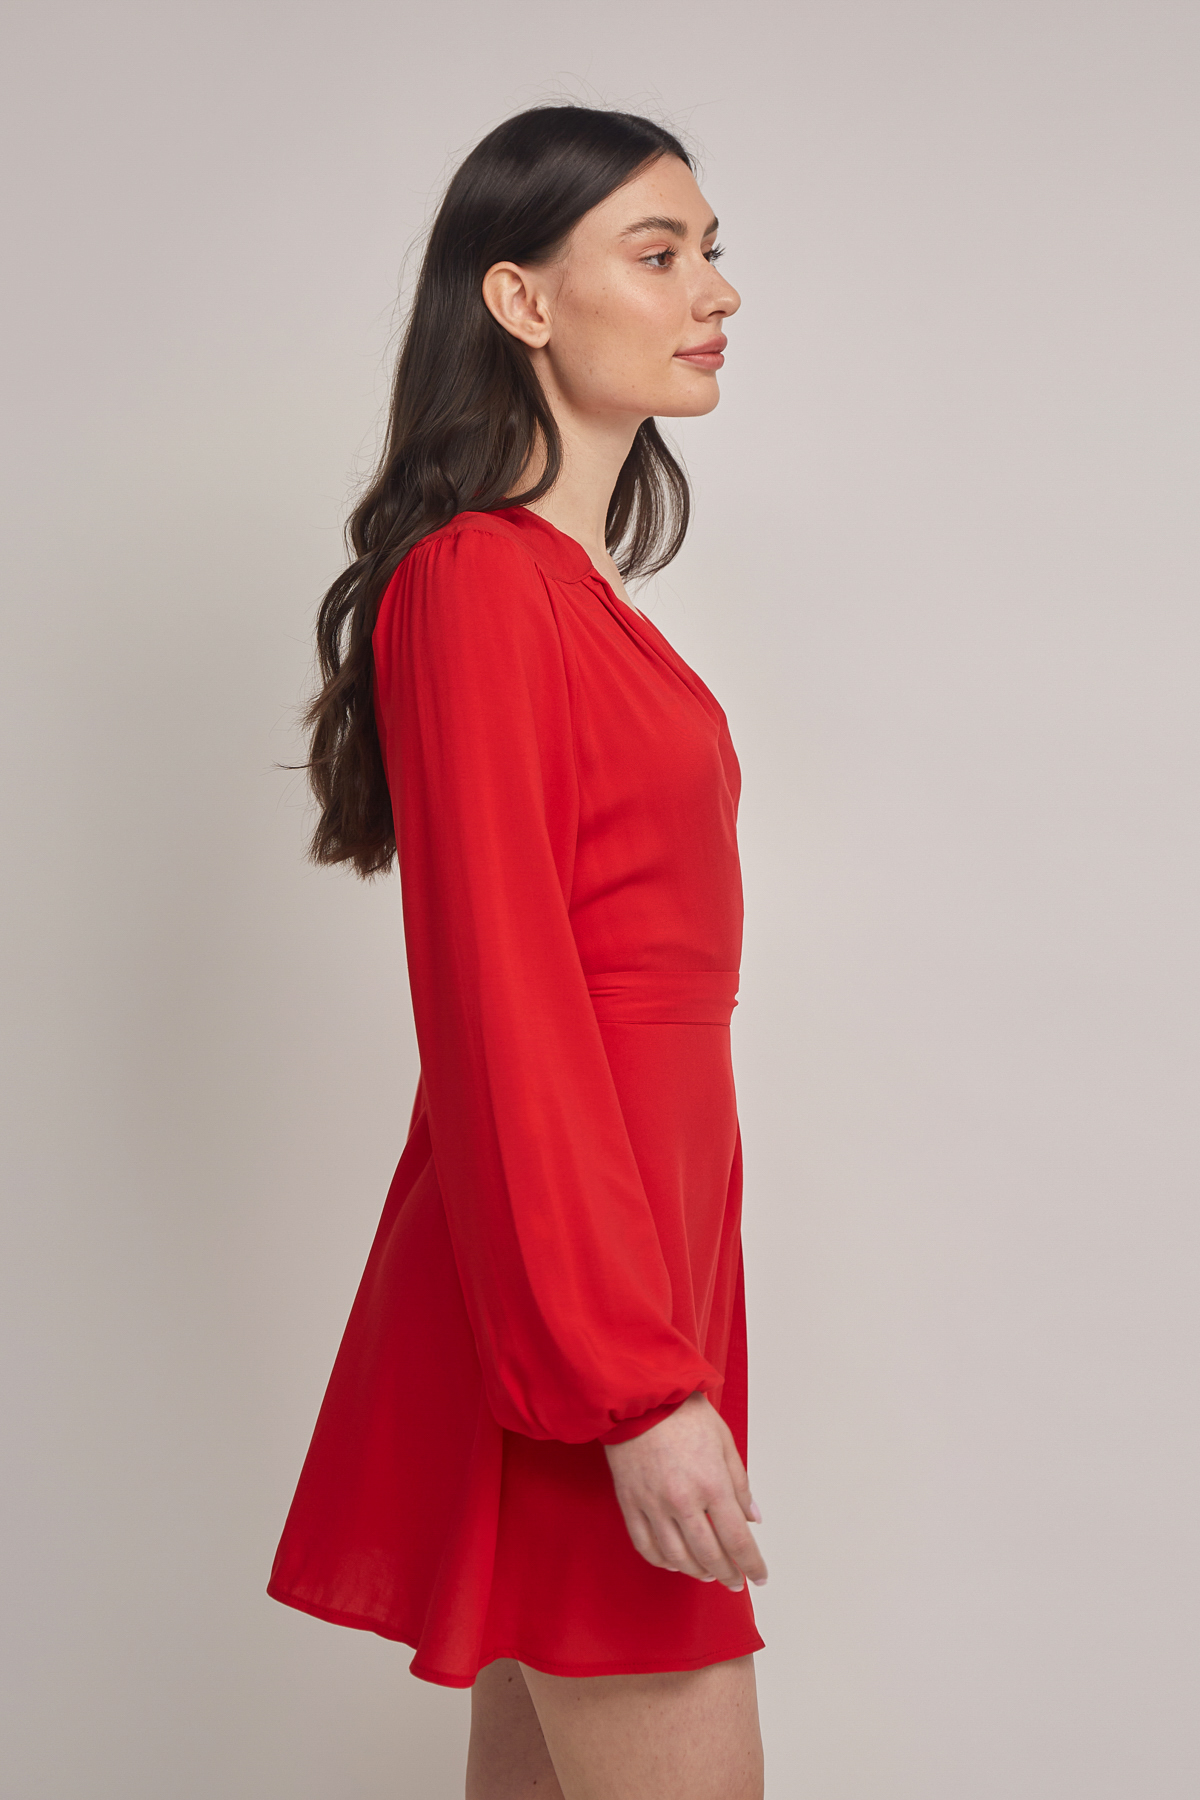 Red short dress, photo 3